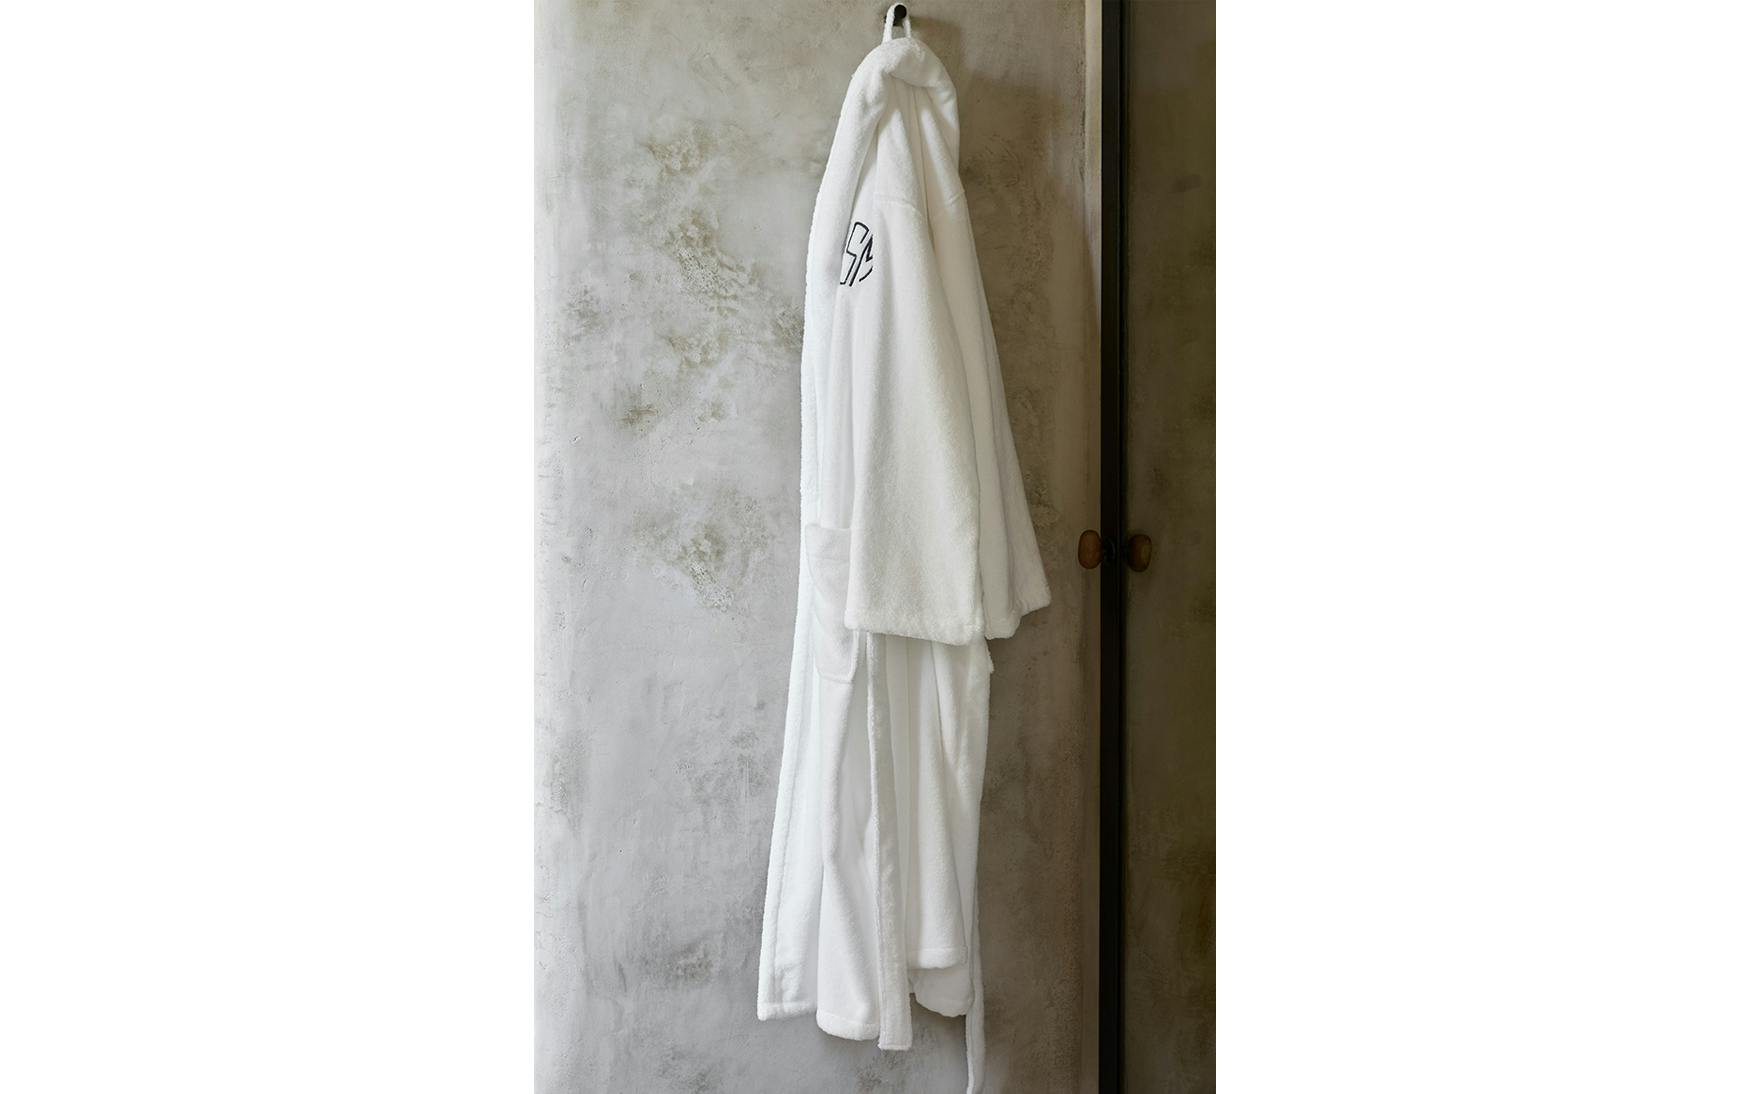 Matouk Milagro Bath Towels in Ivory - Emissary Fine Linens